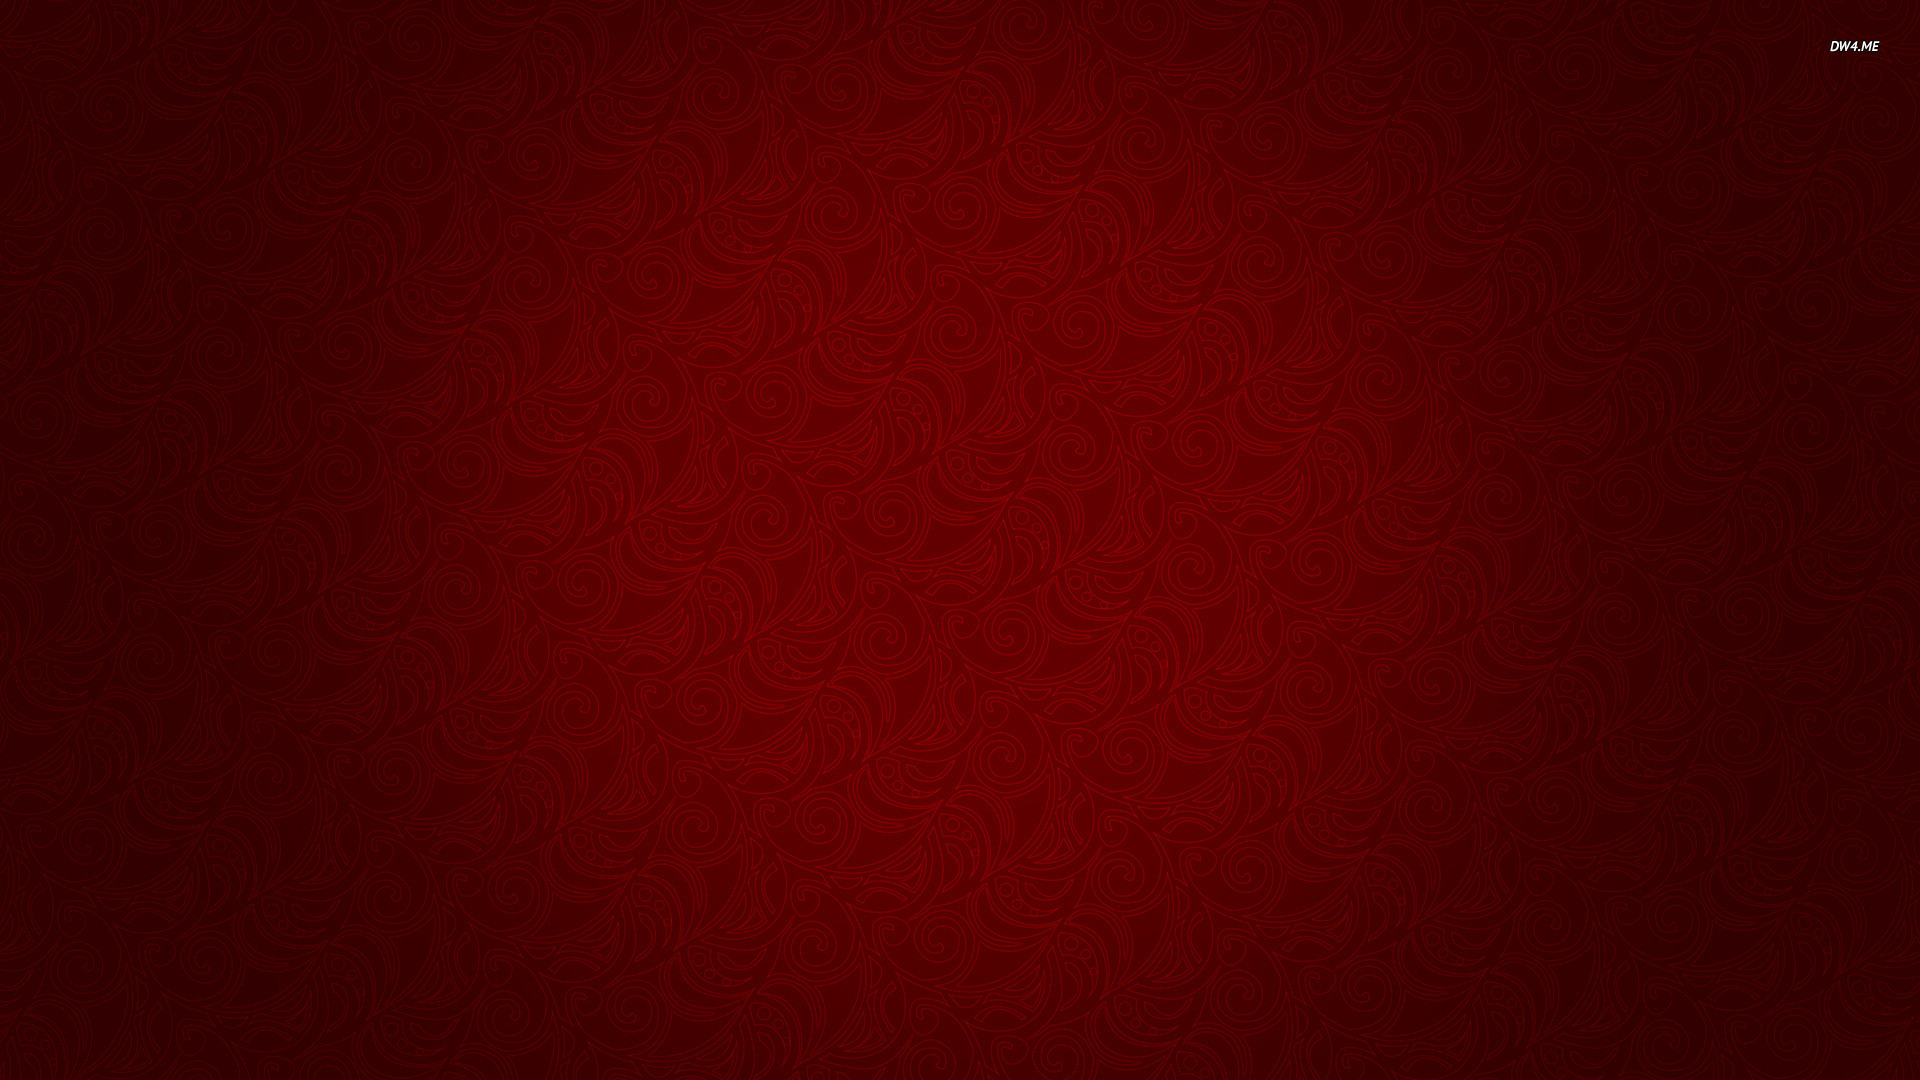 1920x1080 Red swirl pattern wallpaper 800367 